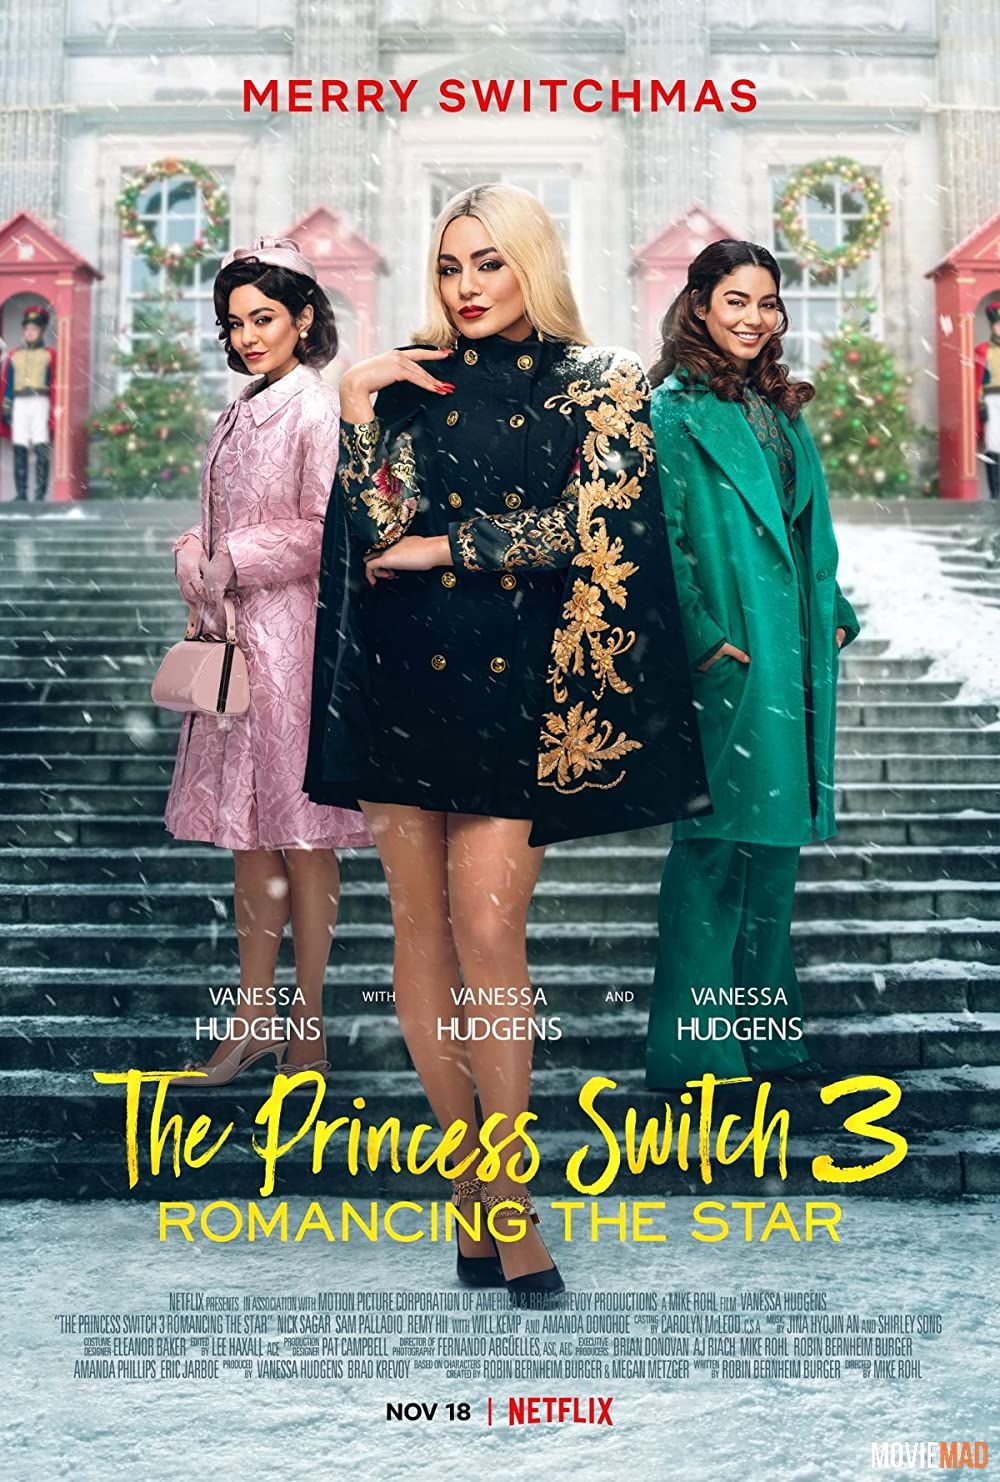 The Princess Switch 3 Romancing the Star 2021 English NF HDRip Full Movie 1080p 720p 480p